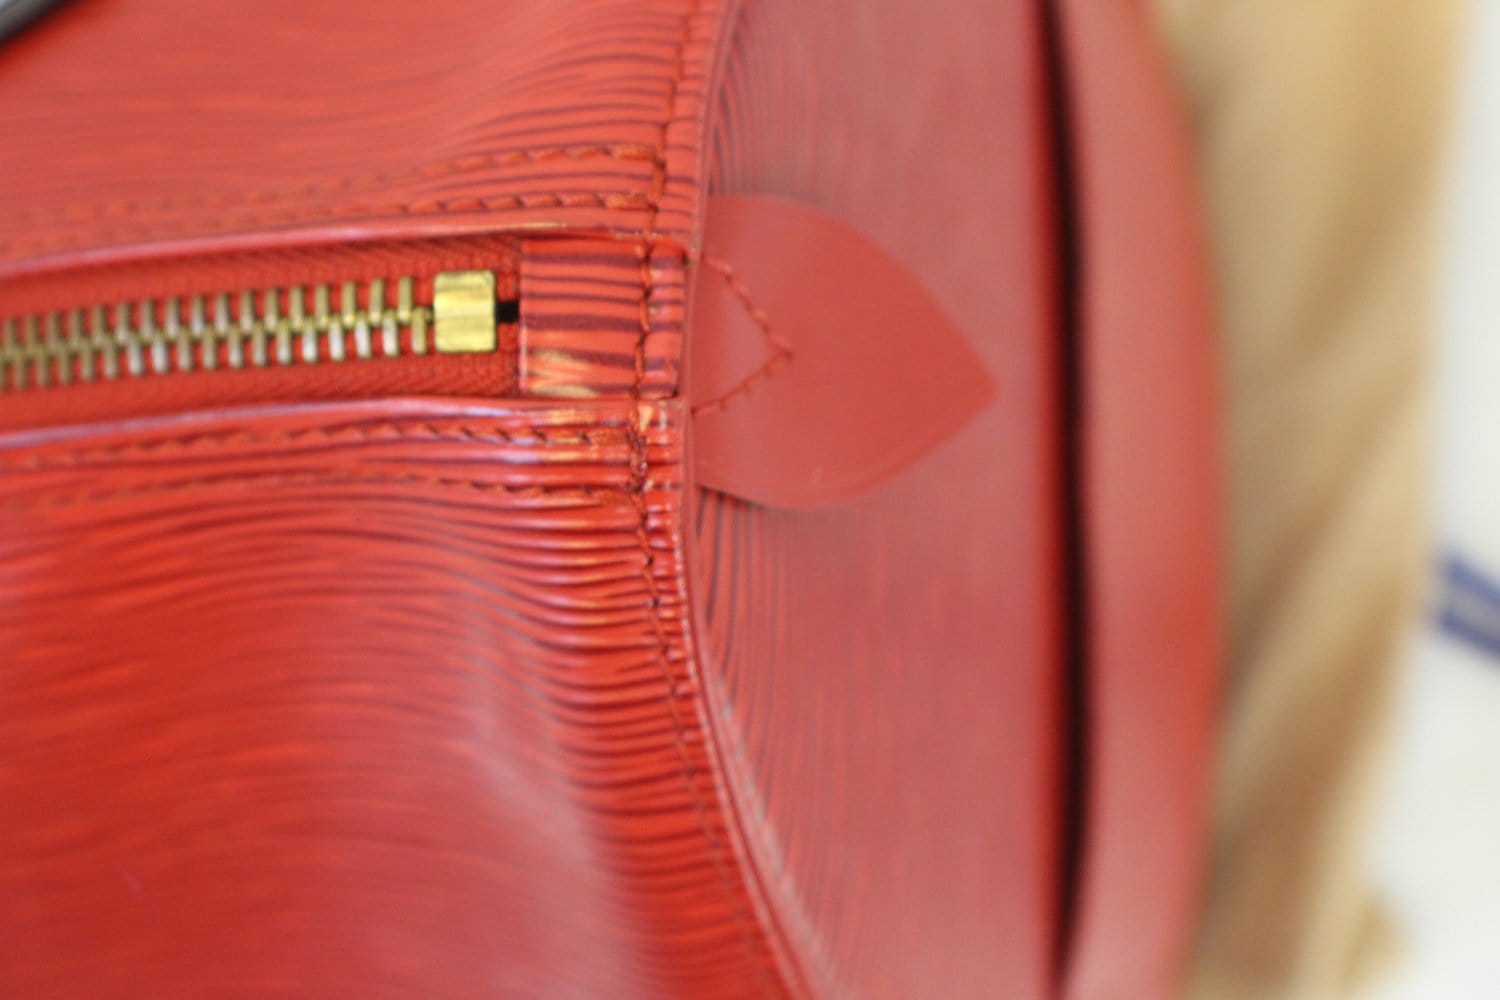 FWRD Renew Louis Vuitton Epi Supreme Keepall 45 Boston Bag in Red